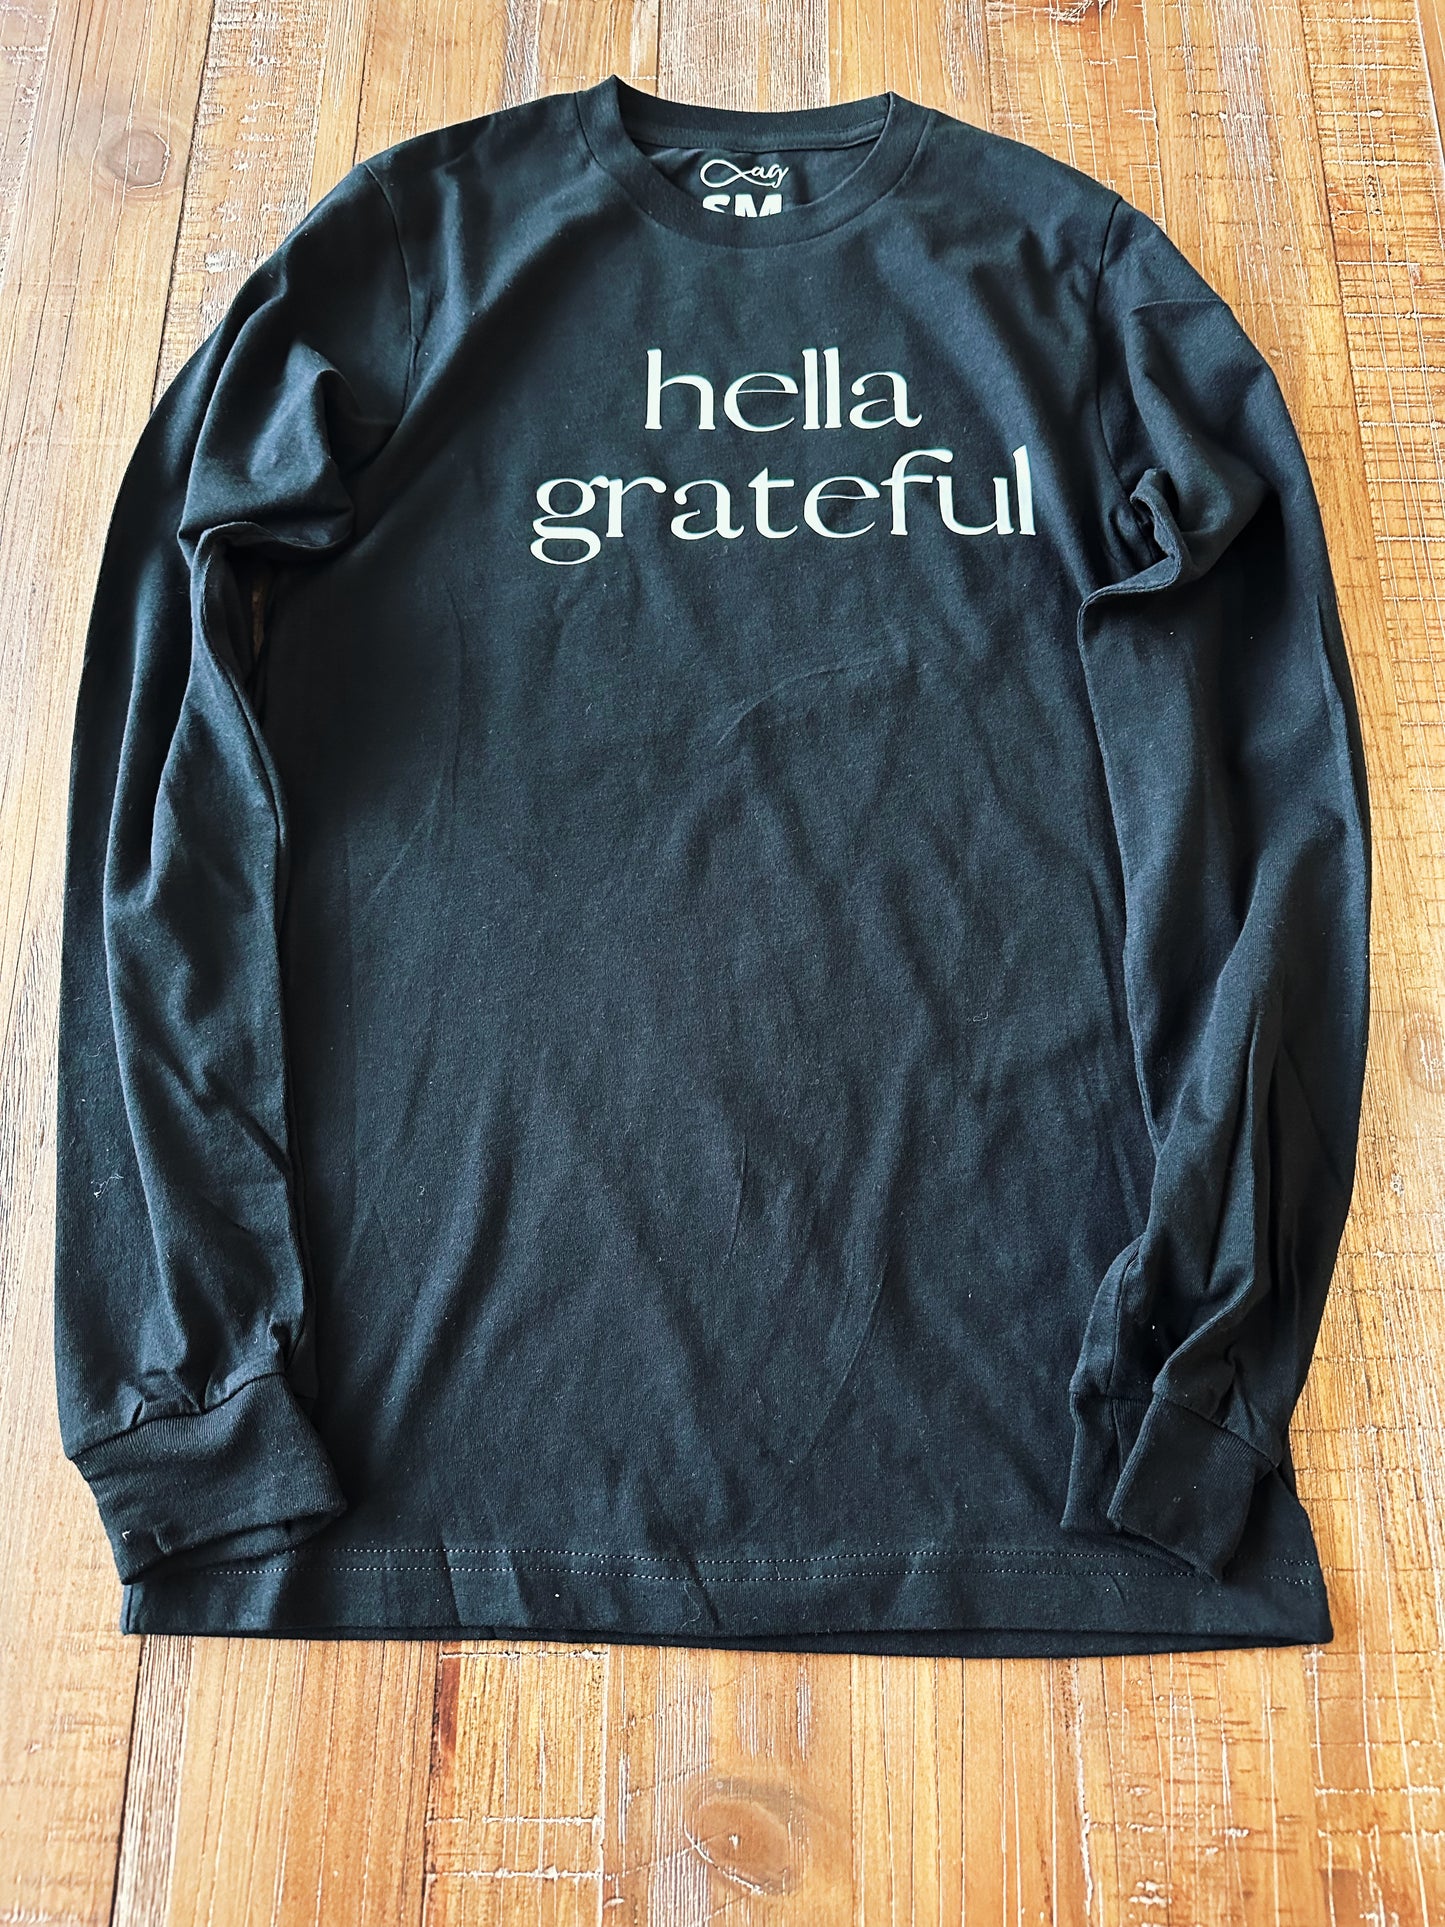 Hella Grateful T-shirt (Long sleeve)